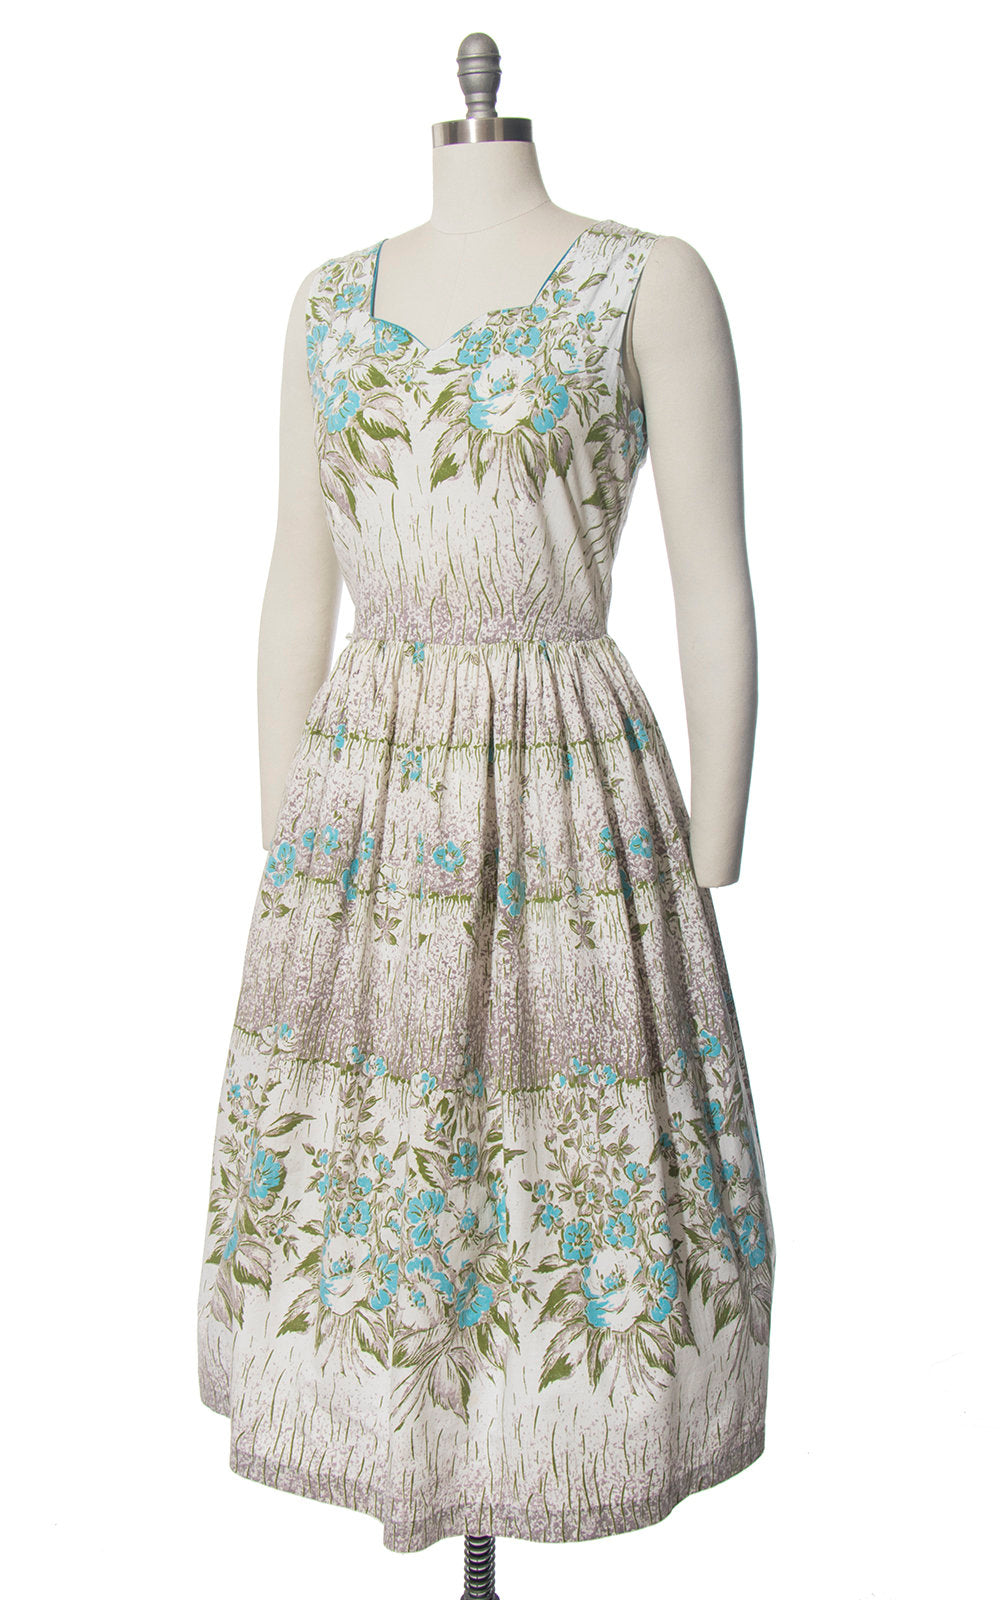 Vintage 1940s 1950s Dress | 40s 50s Floral Border Print Cotton Sundress Blue White Full Skirt Day Dress with Pocket (small)